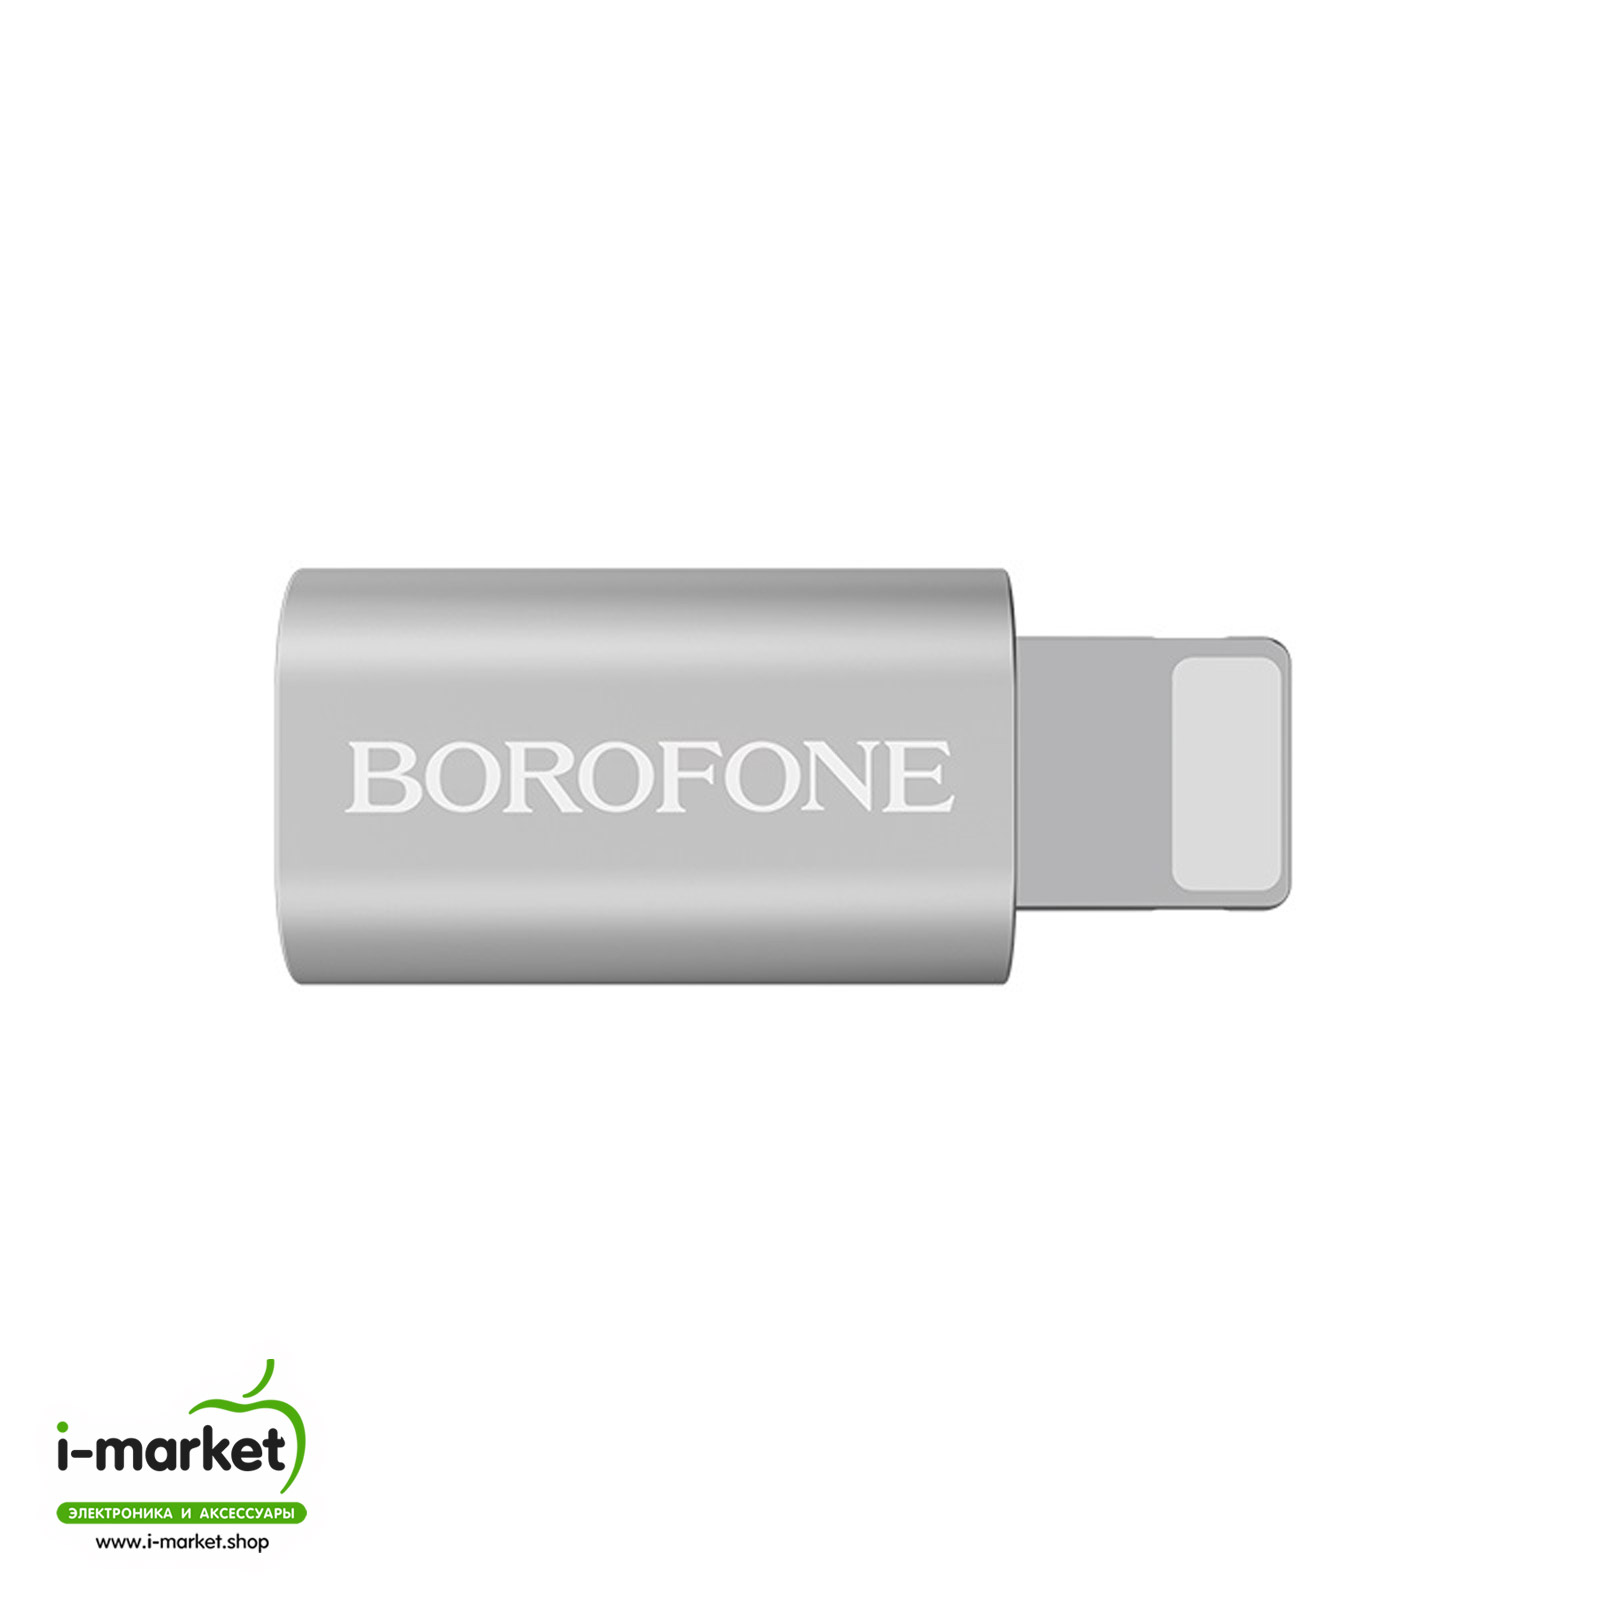 BOROFONE BV5, адаптер / переходник / конвертер Micro USB на APPLE Lightning 8-pin, поддержка OTG, цвет серебристый.